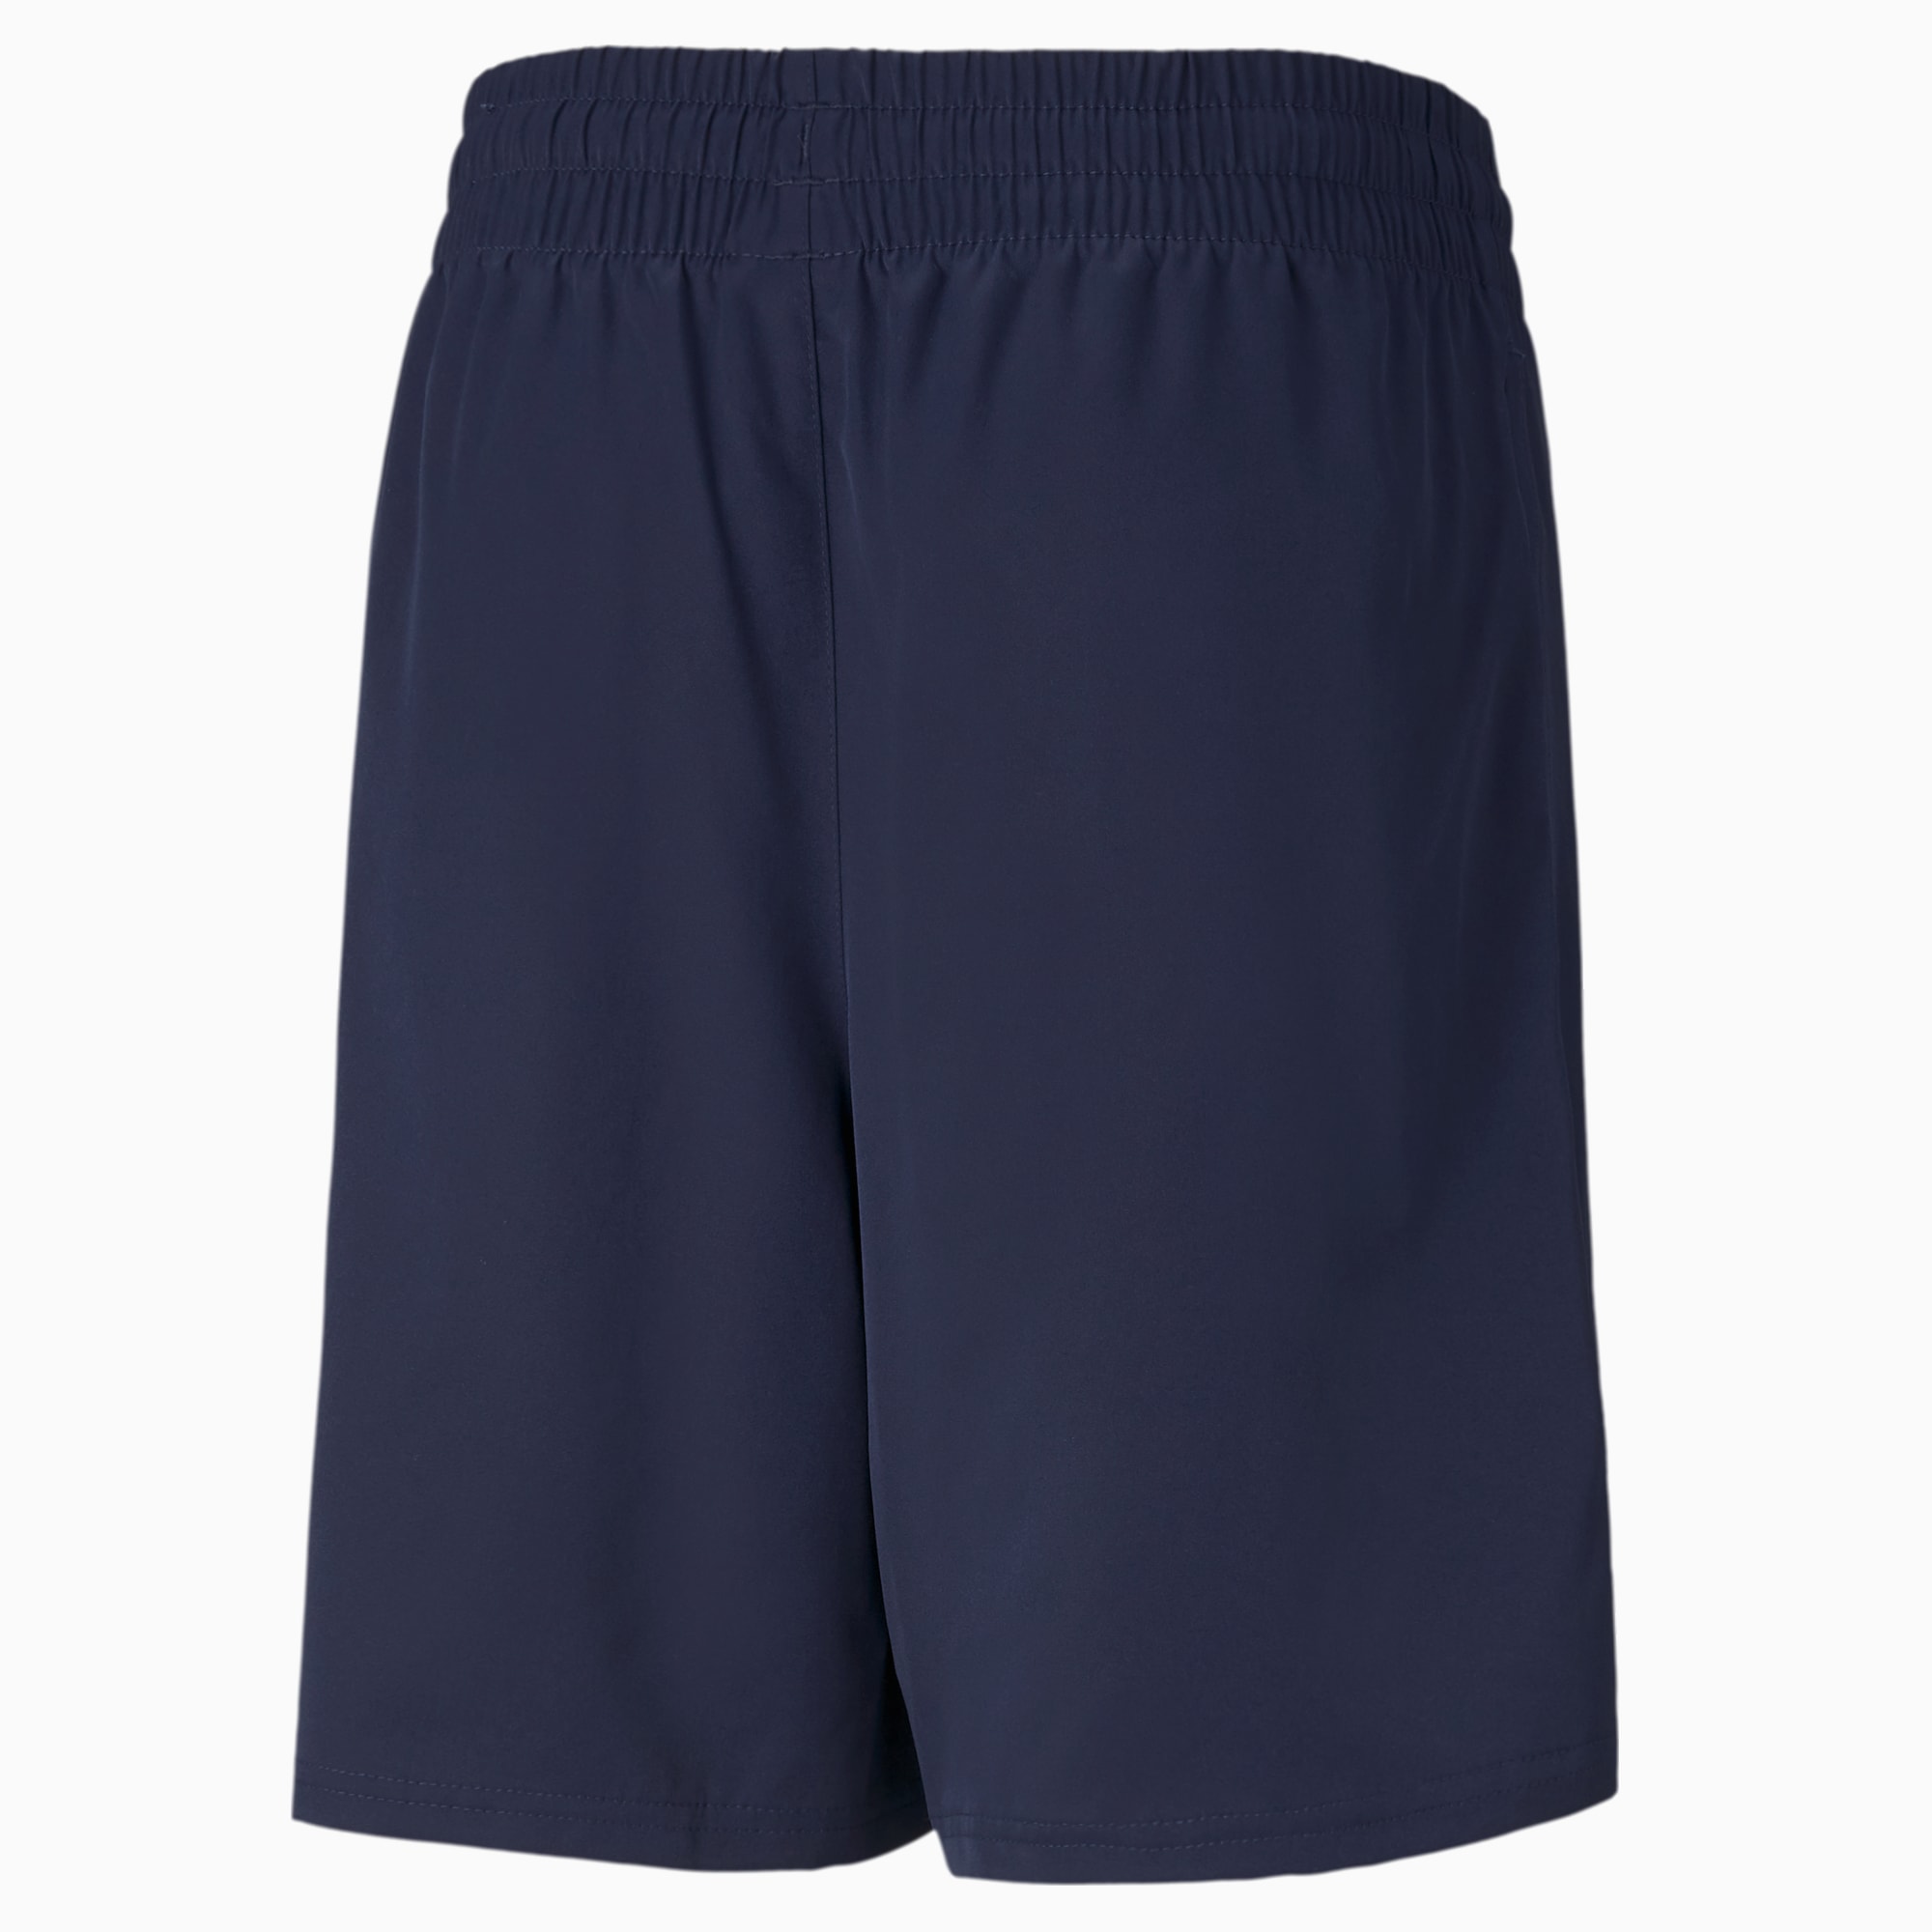 PUMA Performance Woven 7” Men's Training Shorts, Peacoat, Size M, Clothing